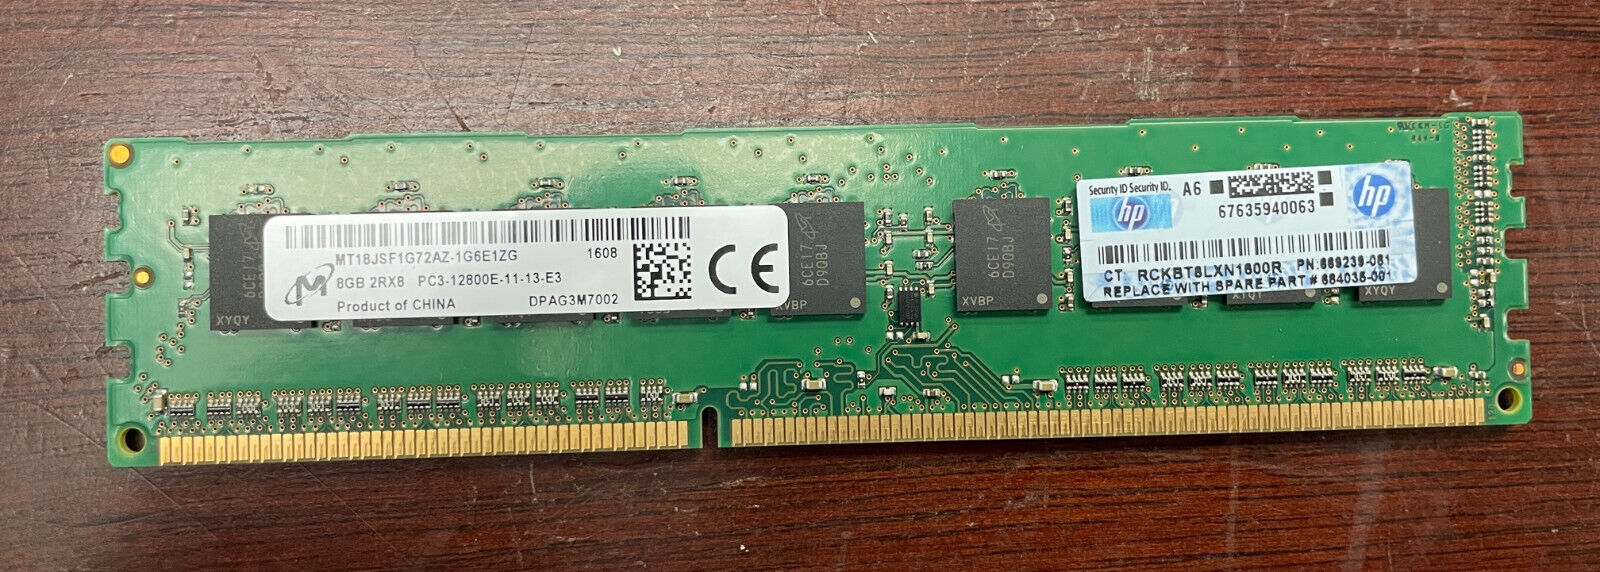 Micron 8GB PC3-12800E ECC UDIMM DDR3 Server Memory HP Microserver Gen8